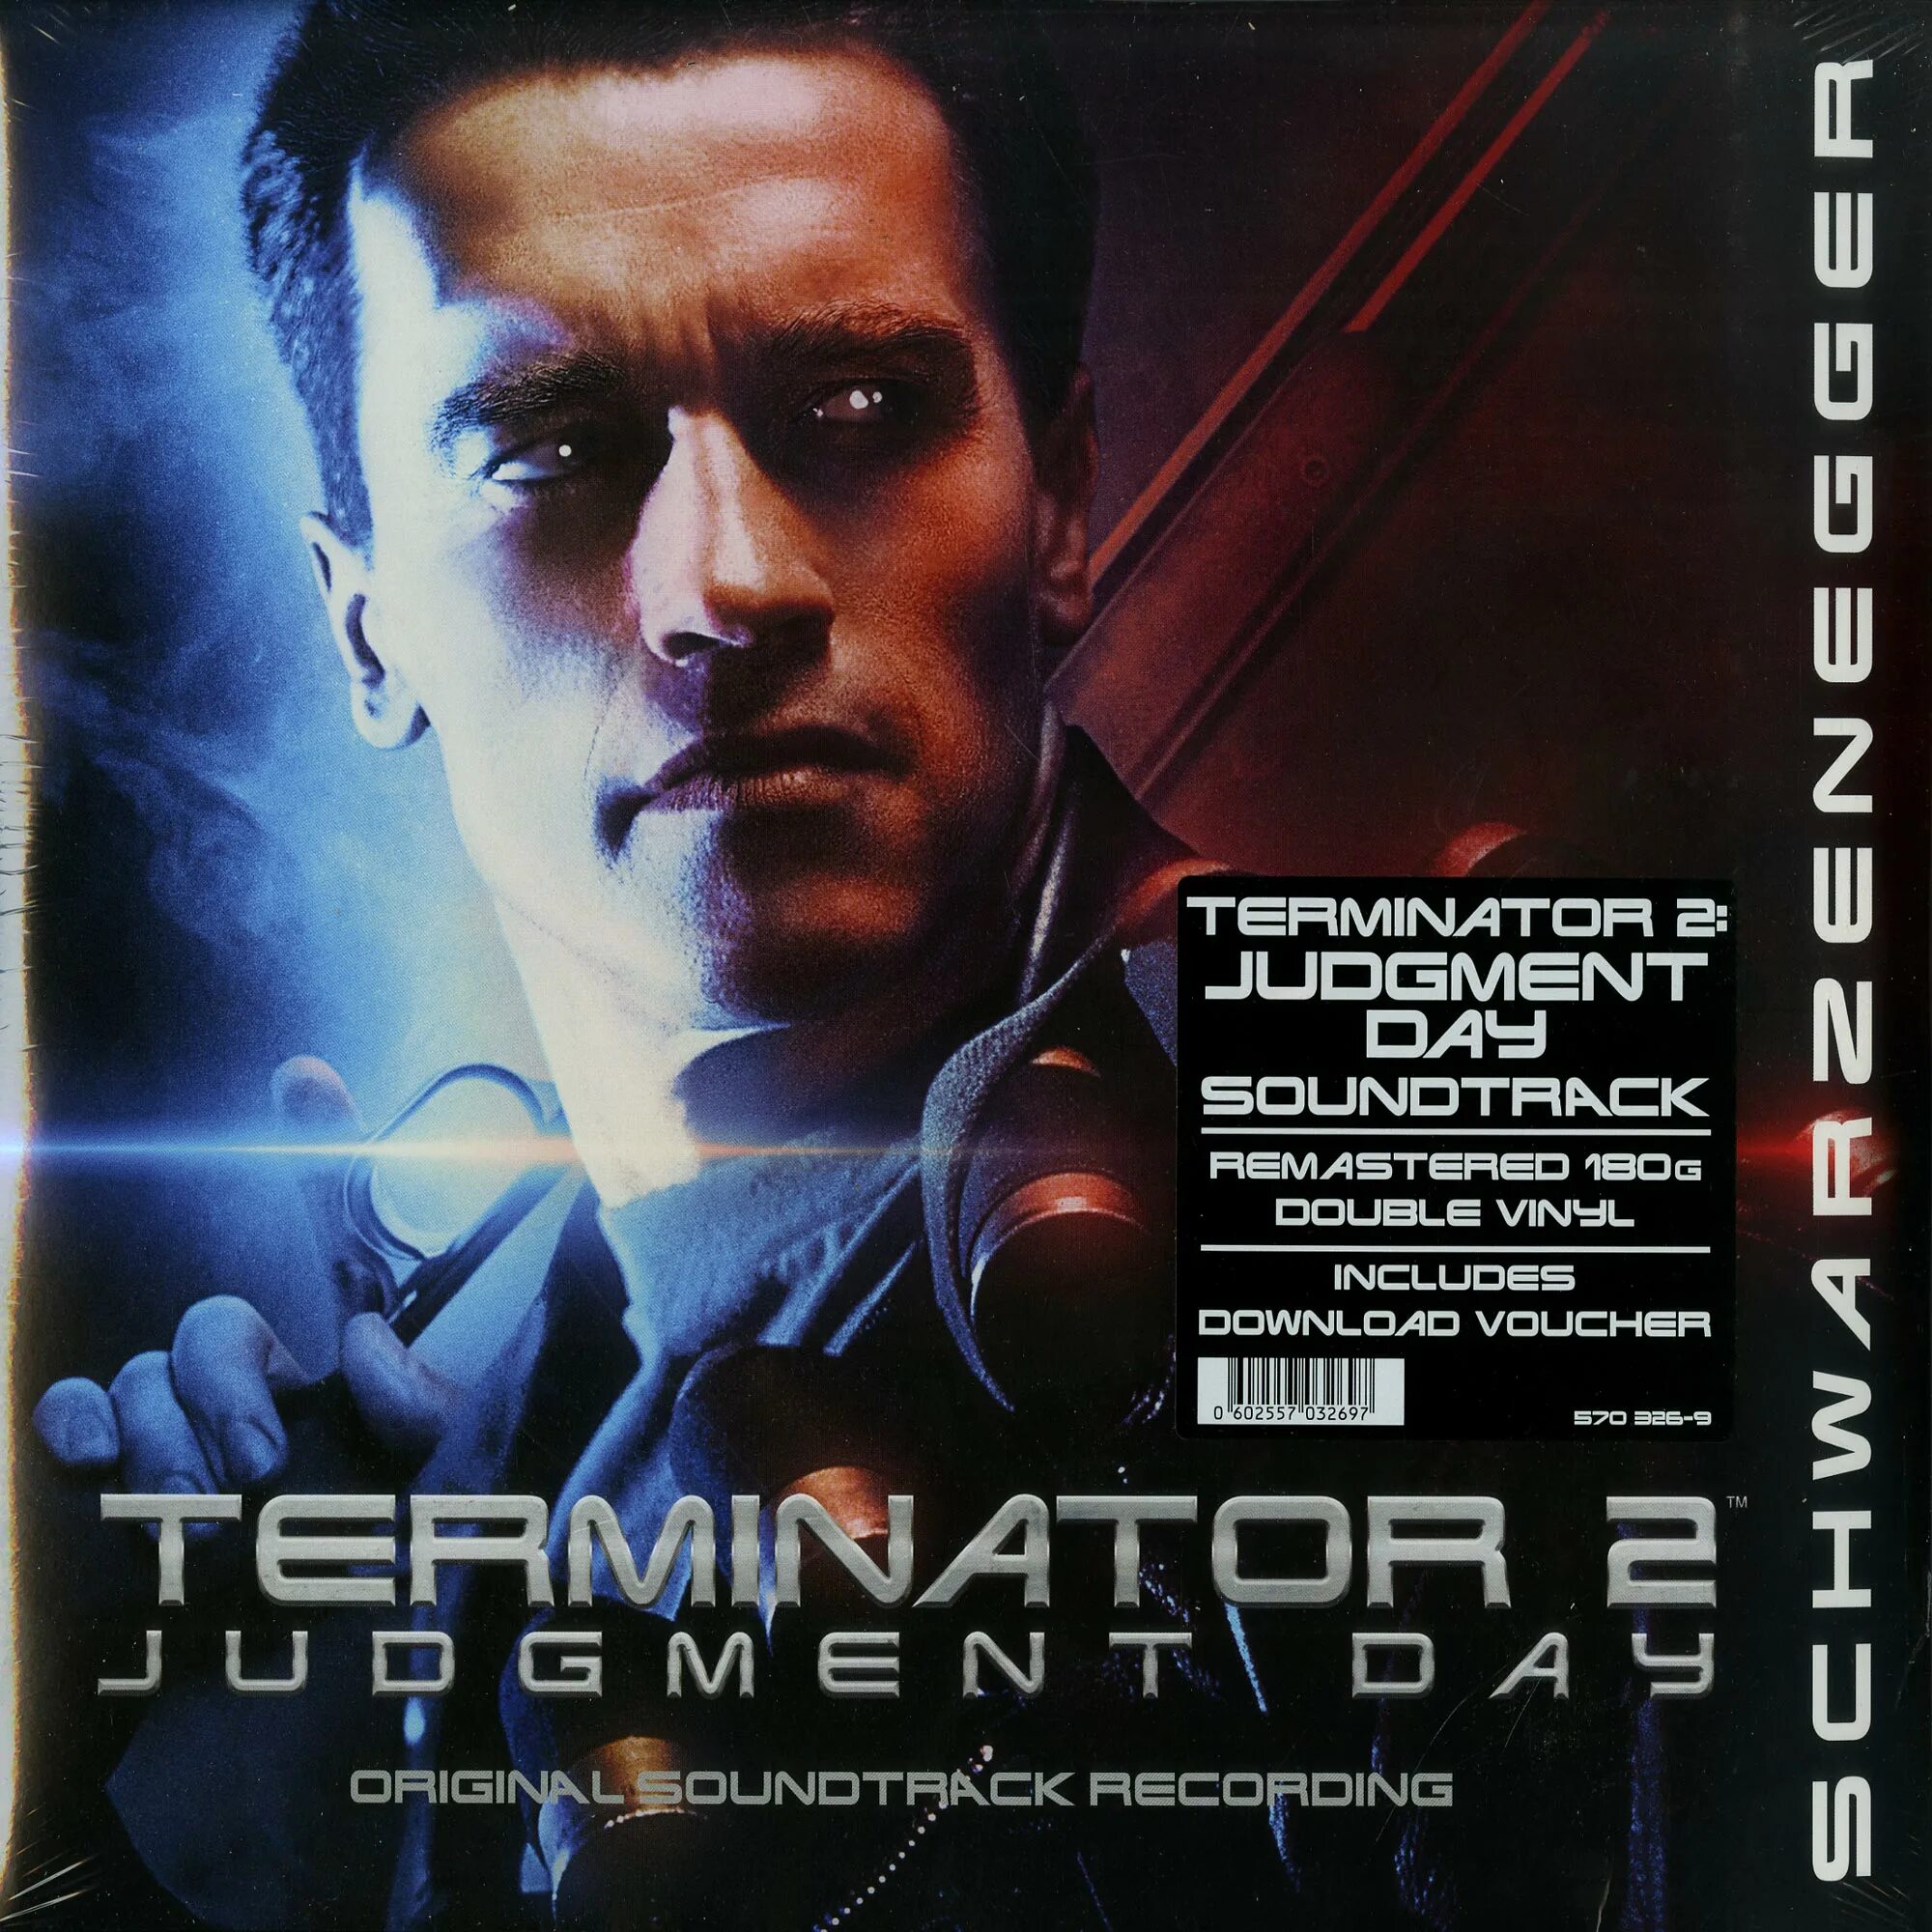 Brad Fiedel Terminator. Brad Fiedel Terminator 2: Judgment Day. OST Terminator (1991). Terminator 2 Judgment Day. Ost terminator